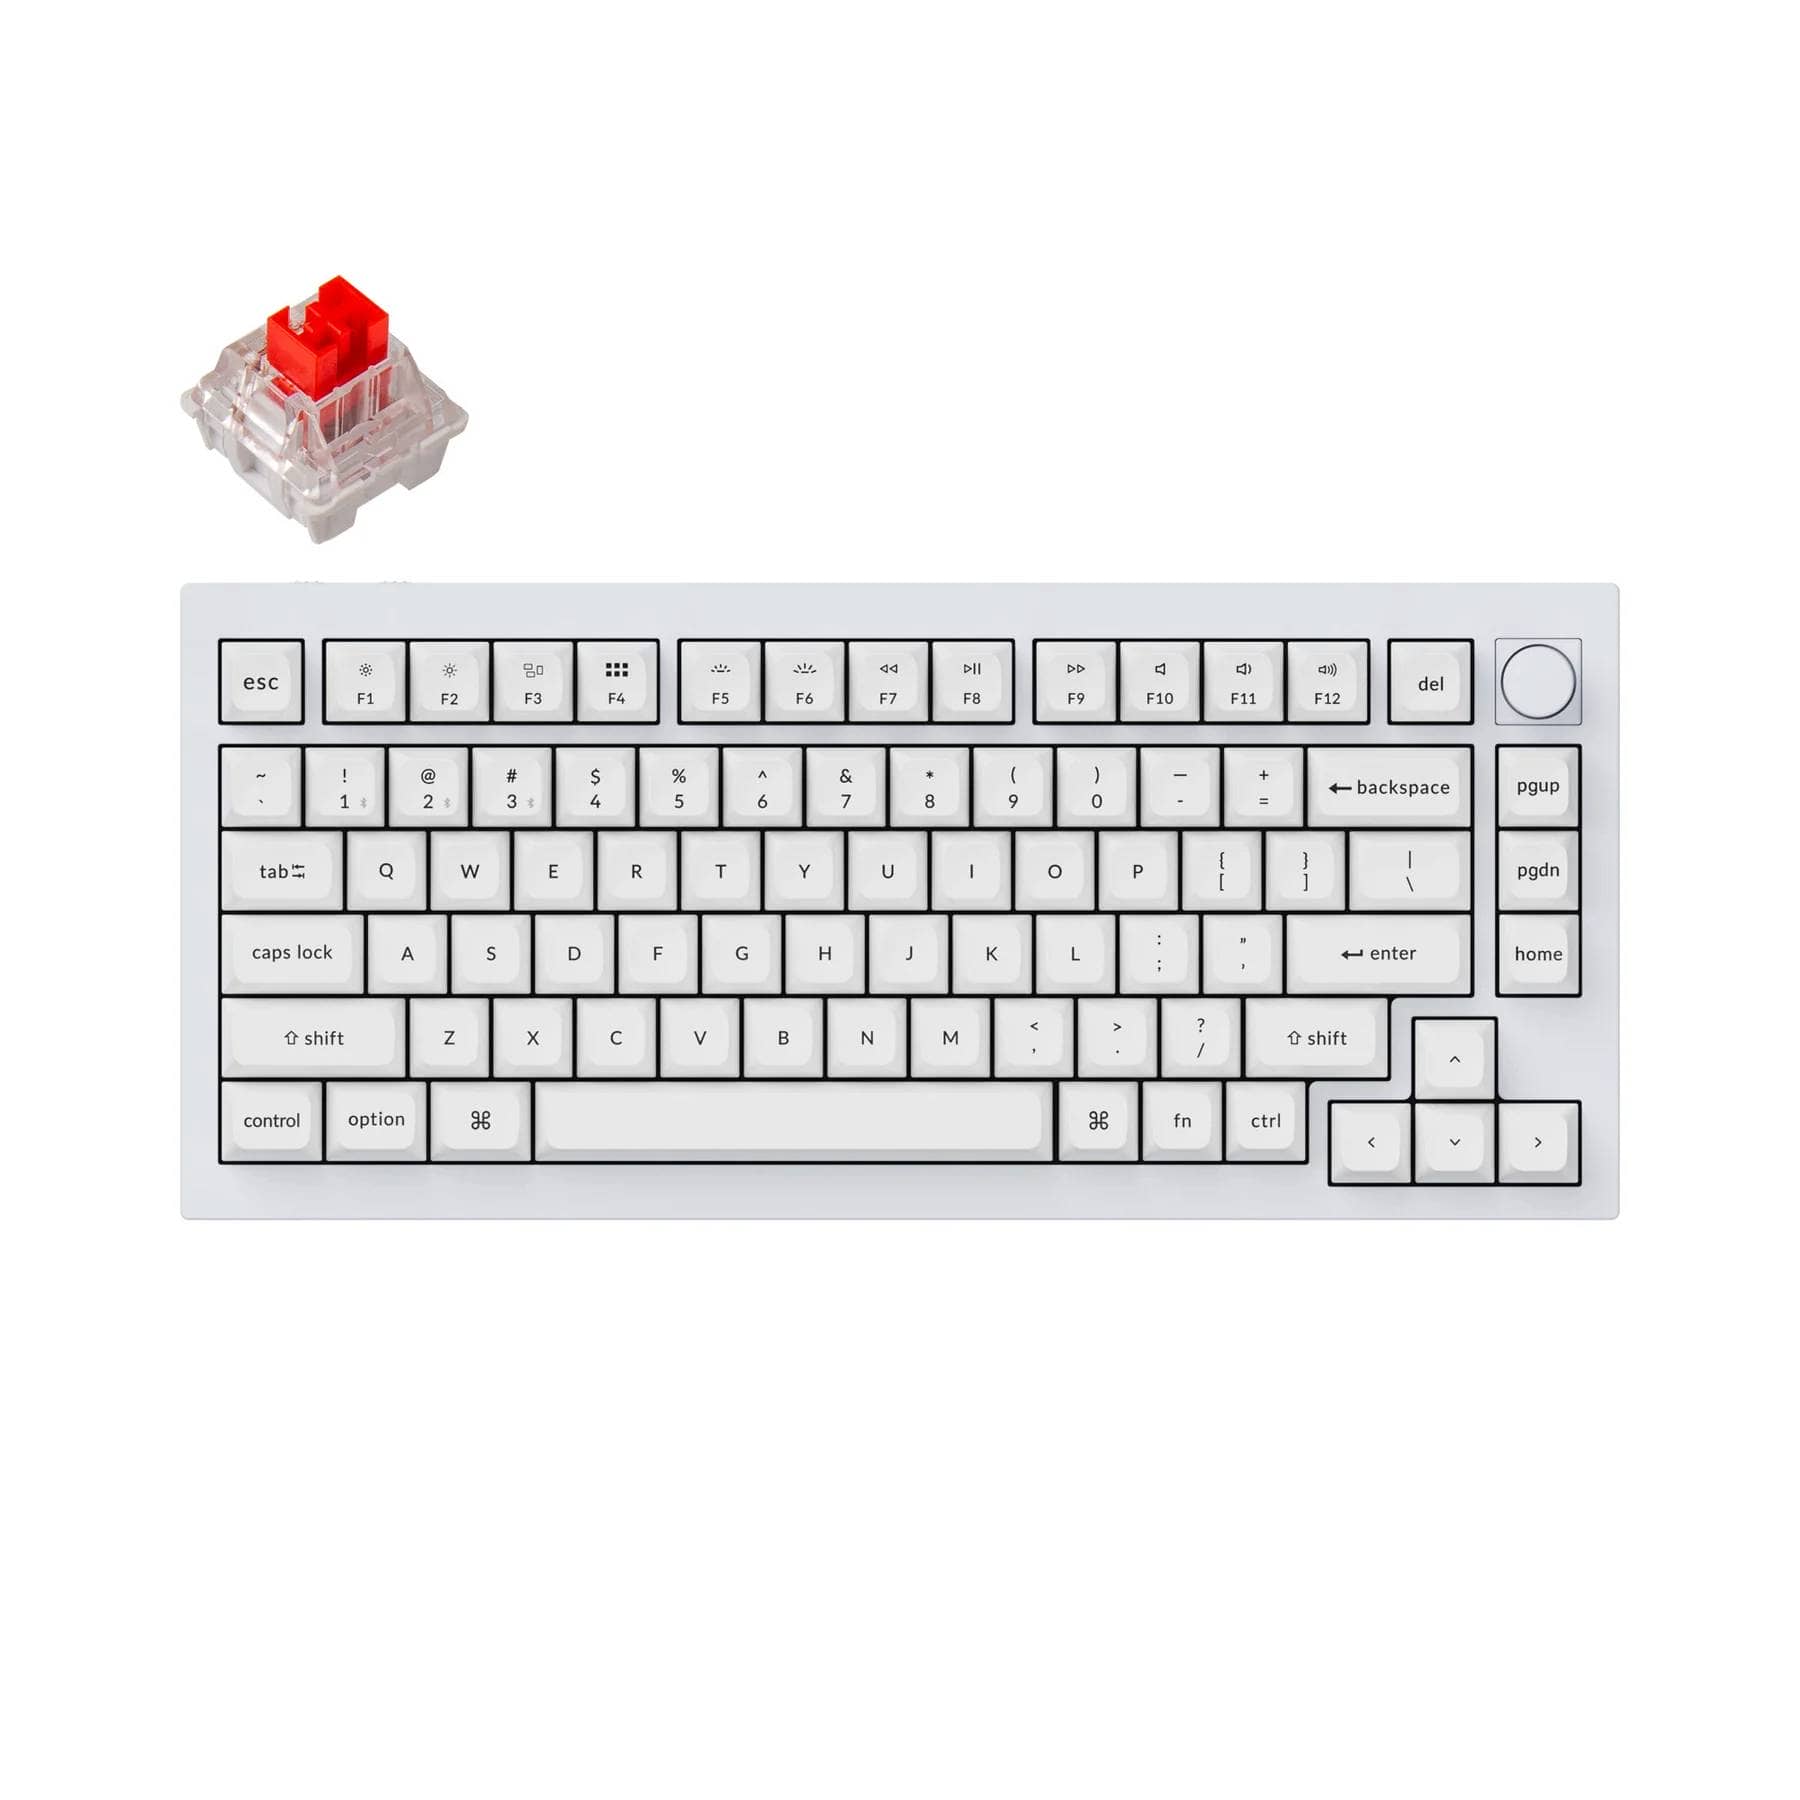 Keychron Q1 Pro QMK VIA wireless custom mechanical keyboard 75 percent layout aluminum white keycaps for Mac WIndows Linux RGB backlight hot swappable K Pro